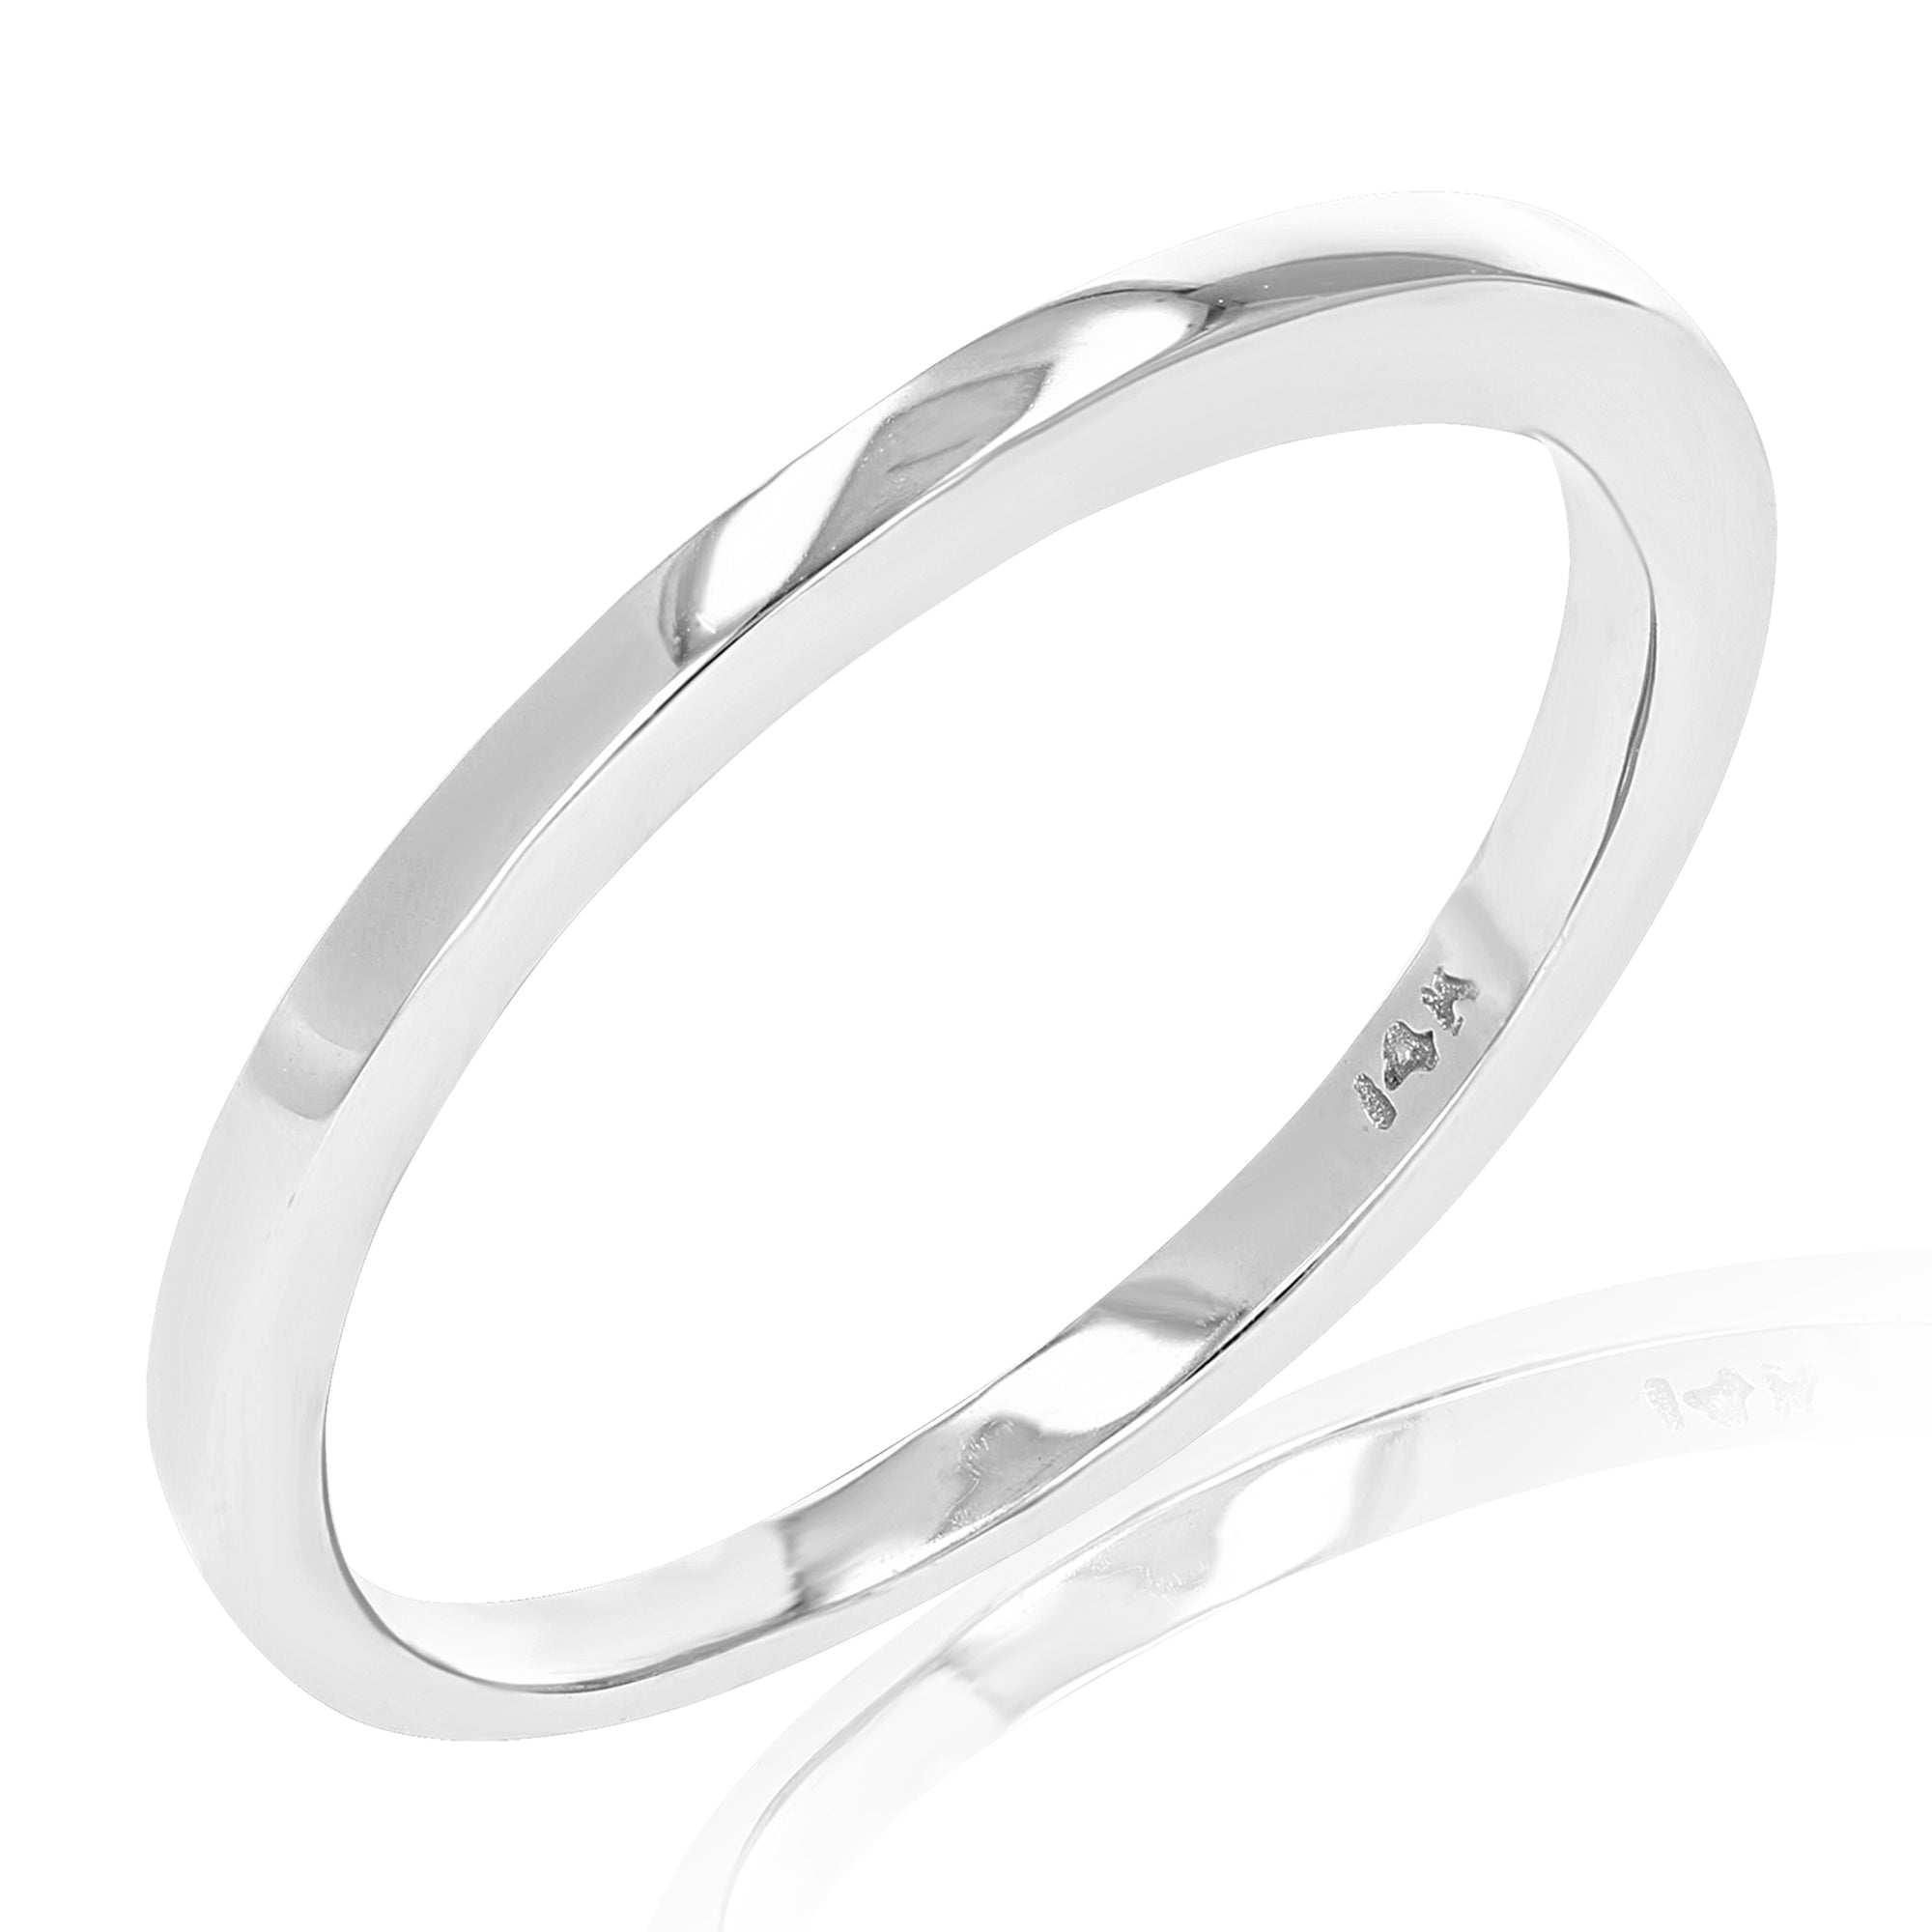 Solid Wedding Band Bridal Ring 14K White Gold Size 7